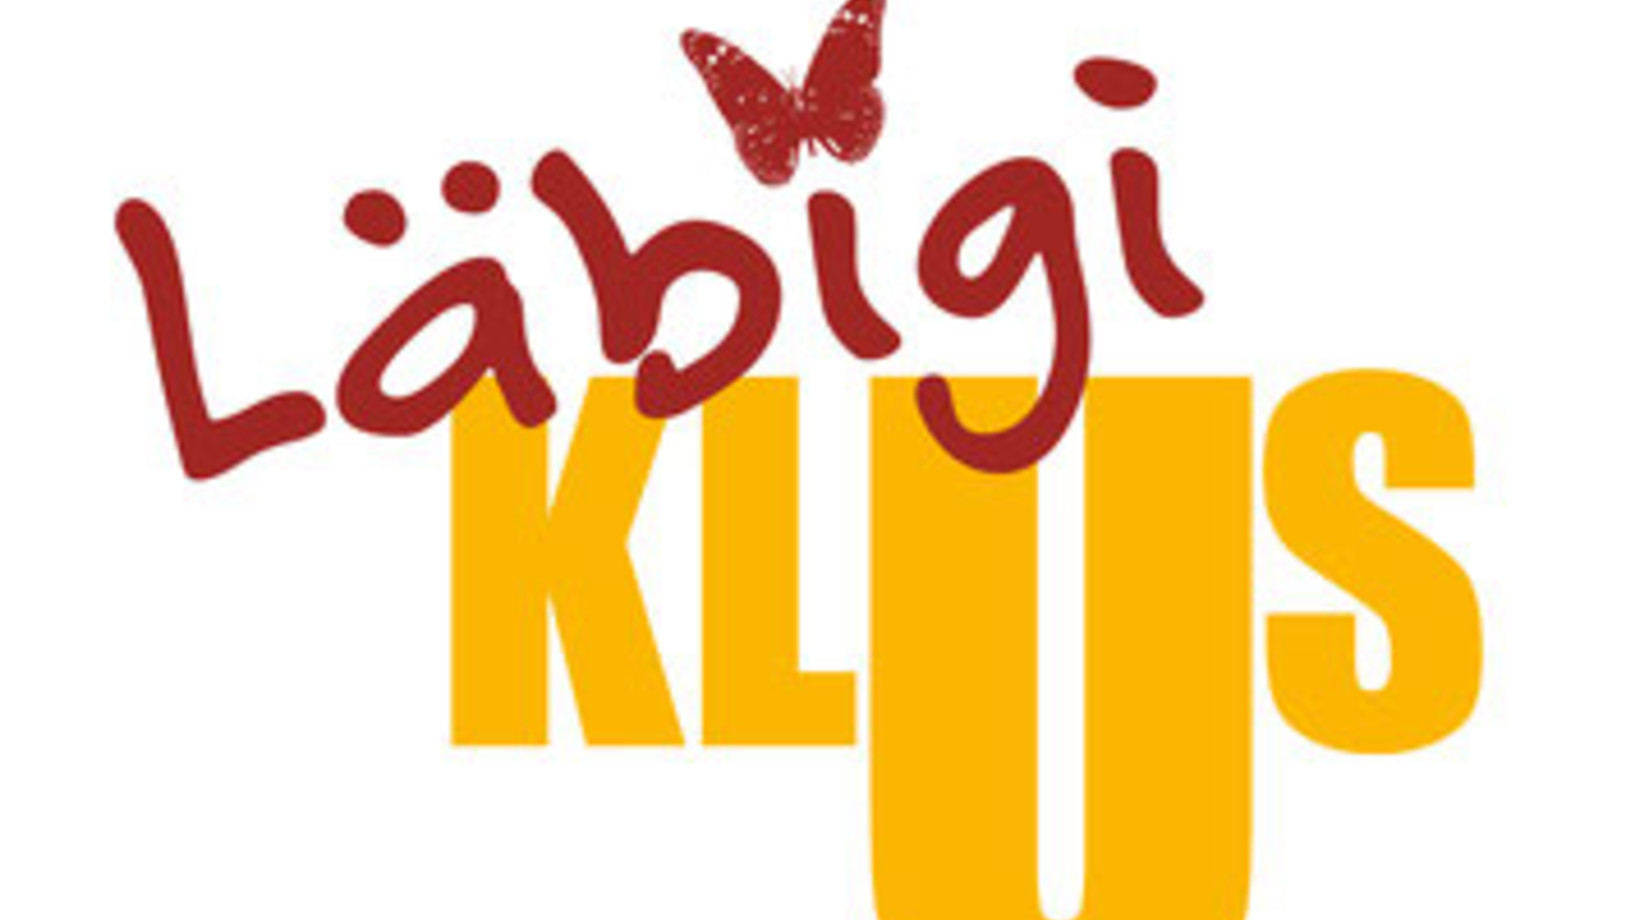 Logo Läbigi Klus